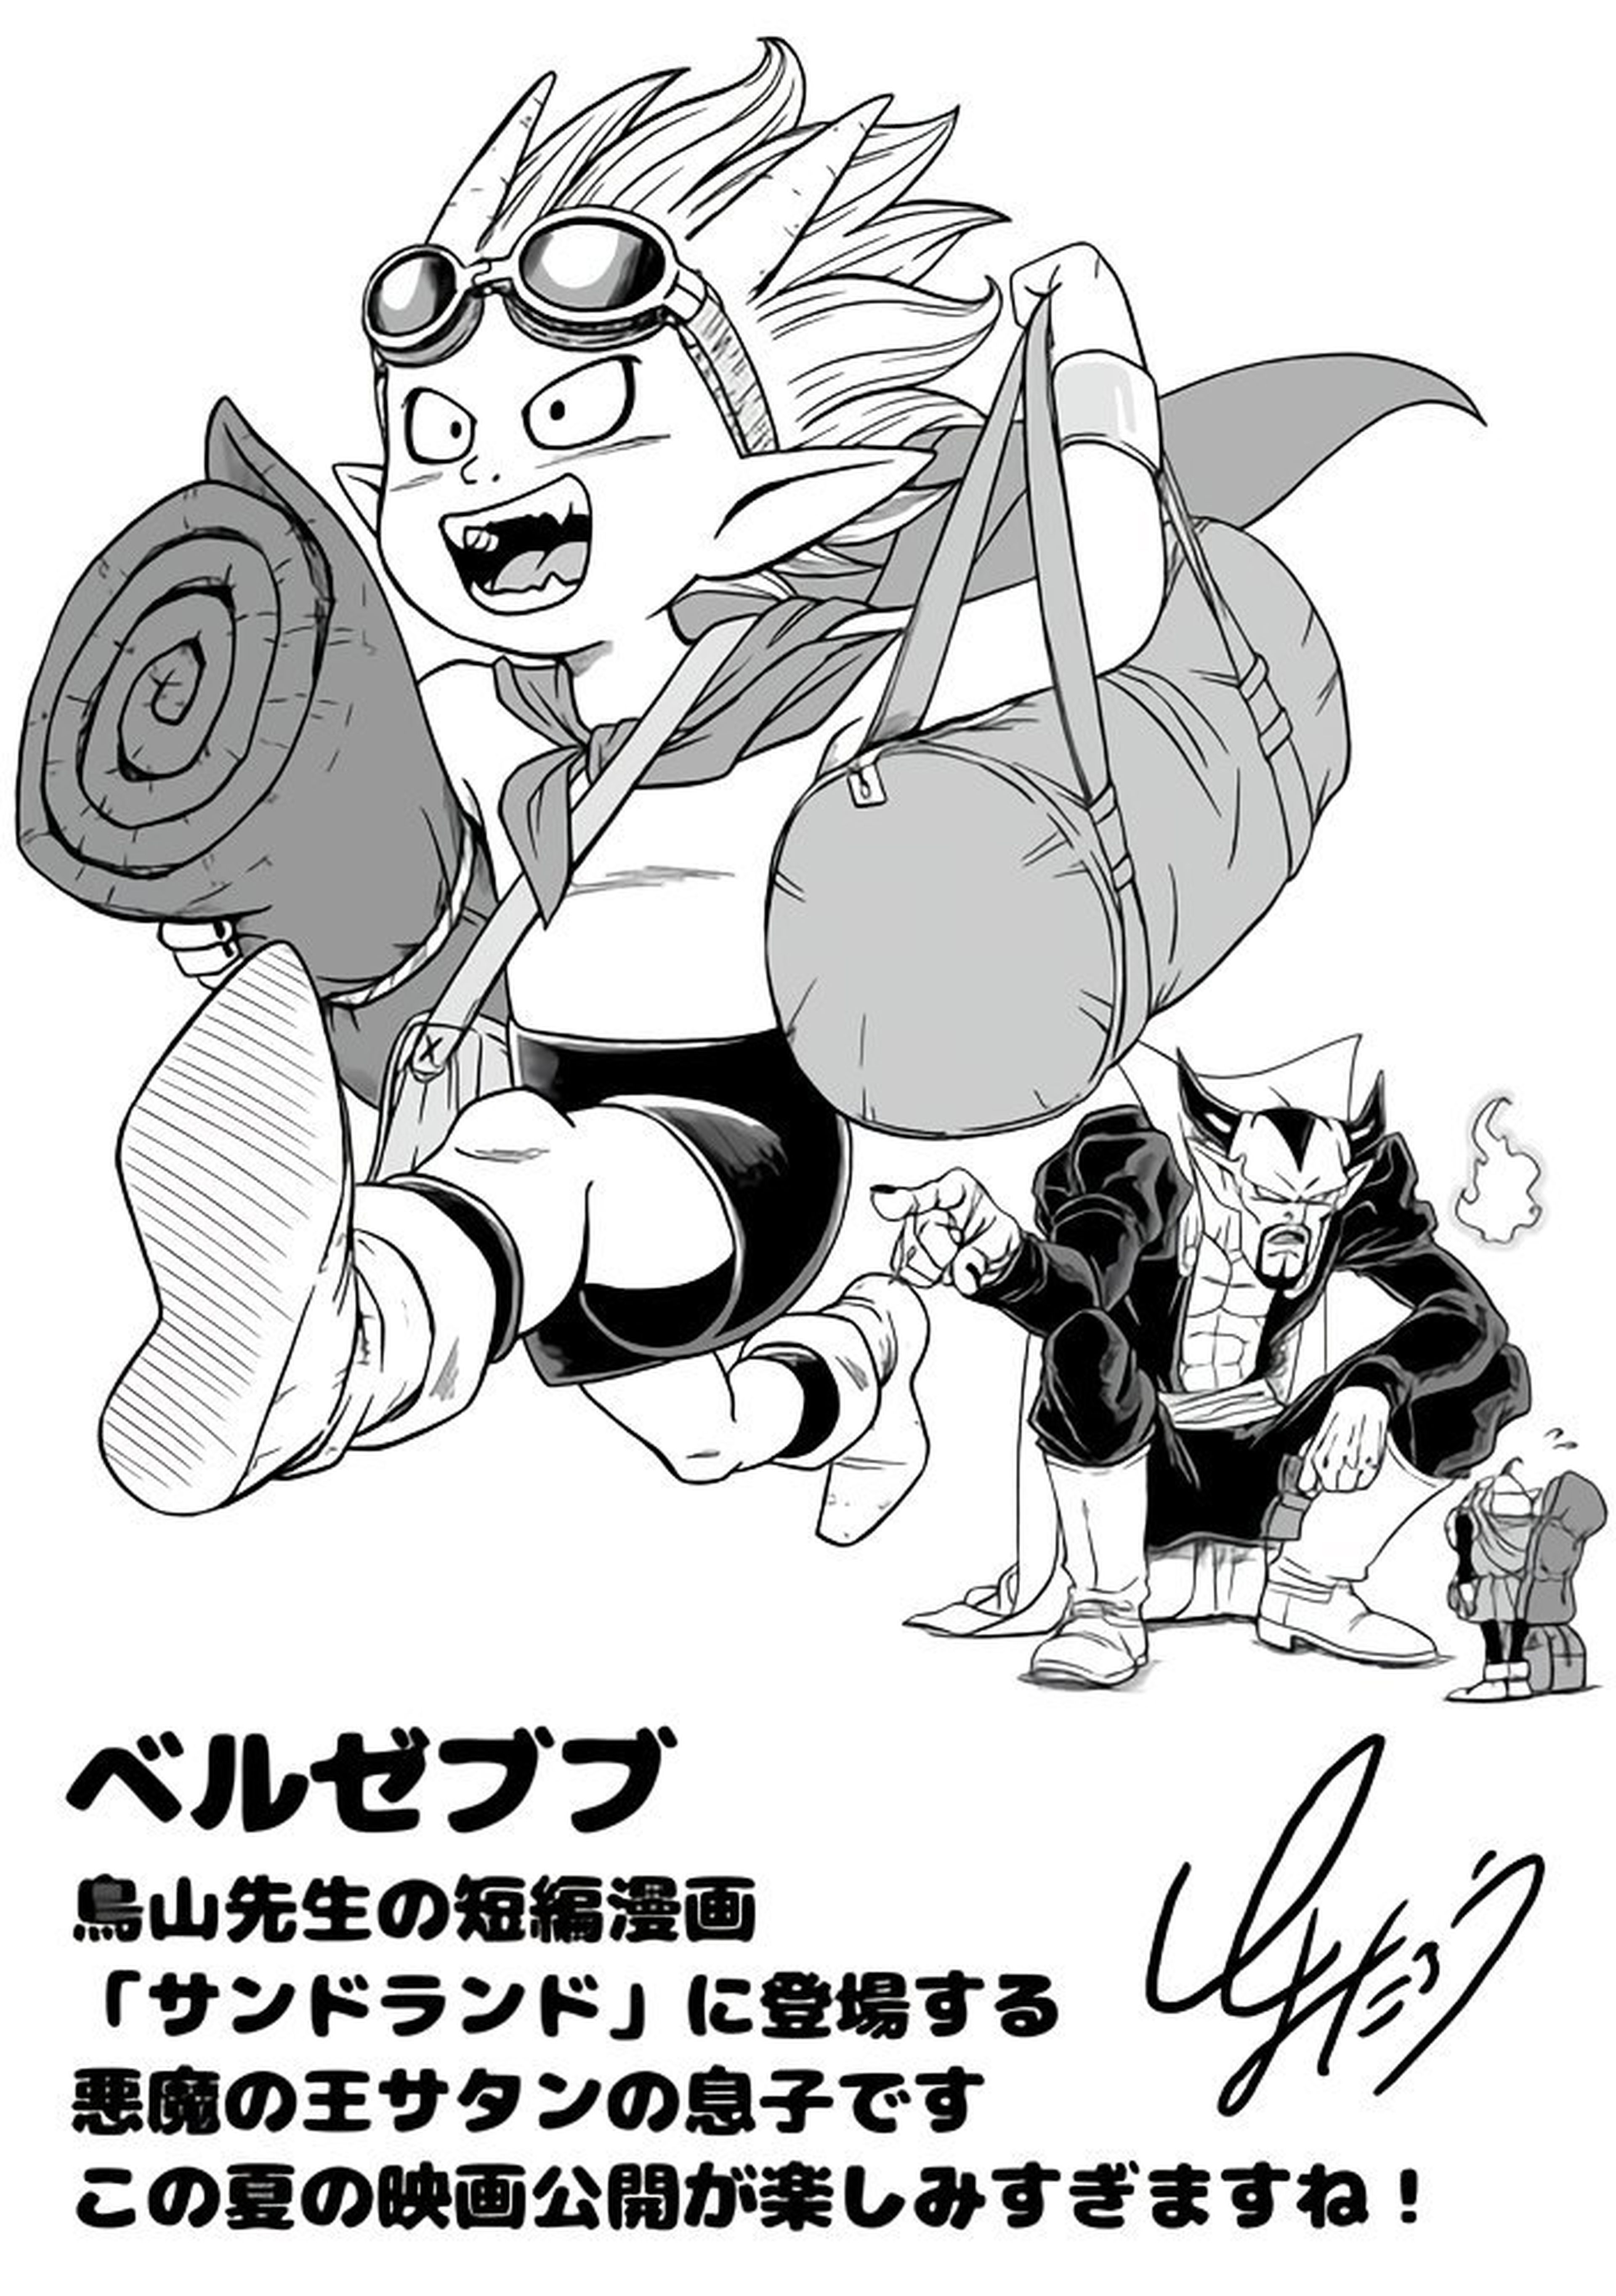 Dragon Ball Super: Super Hero: Toyotaro dibuja al Androide 13 para celebrar  el estreno - Vandal Random